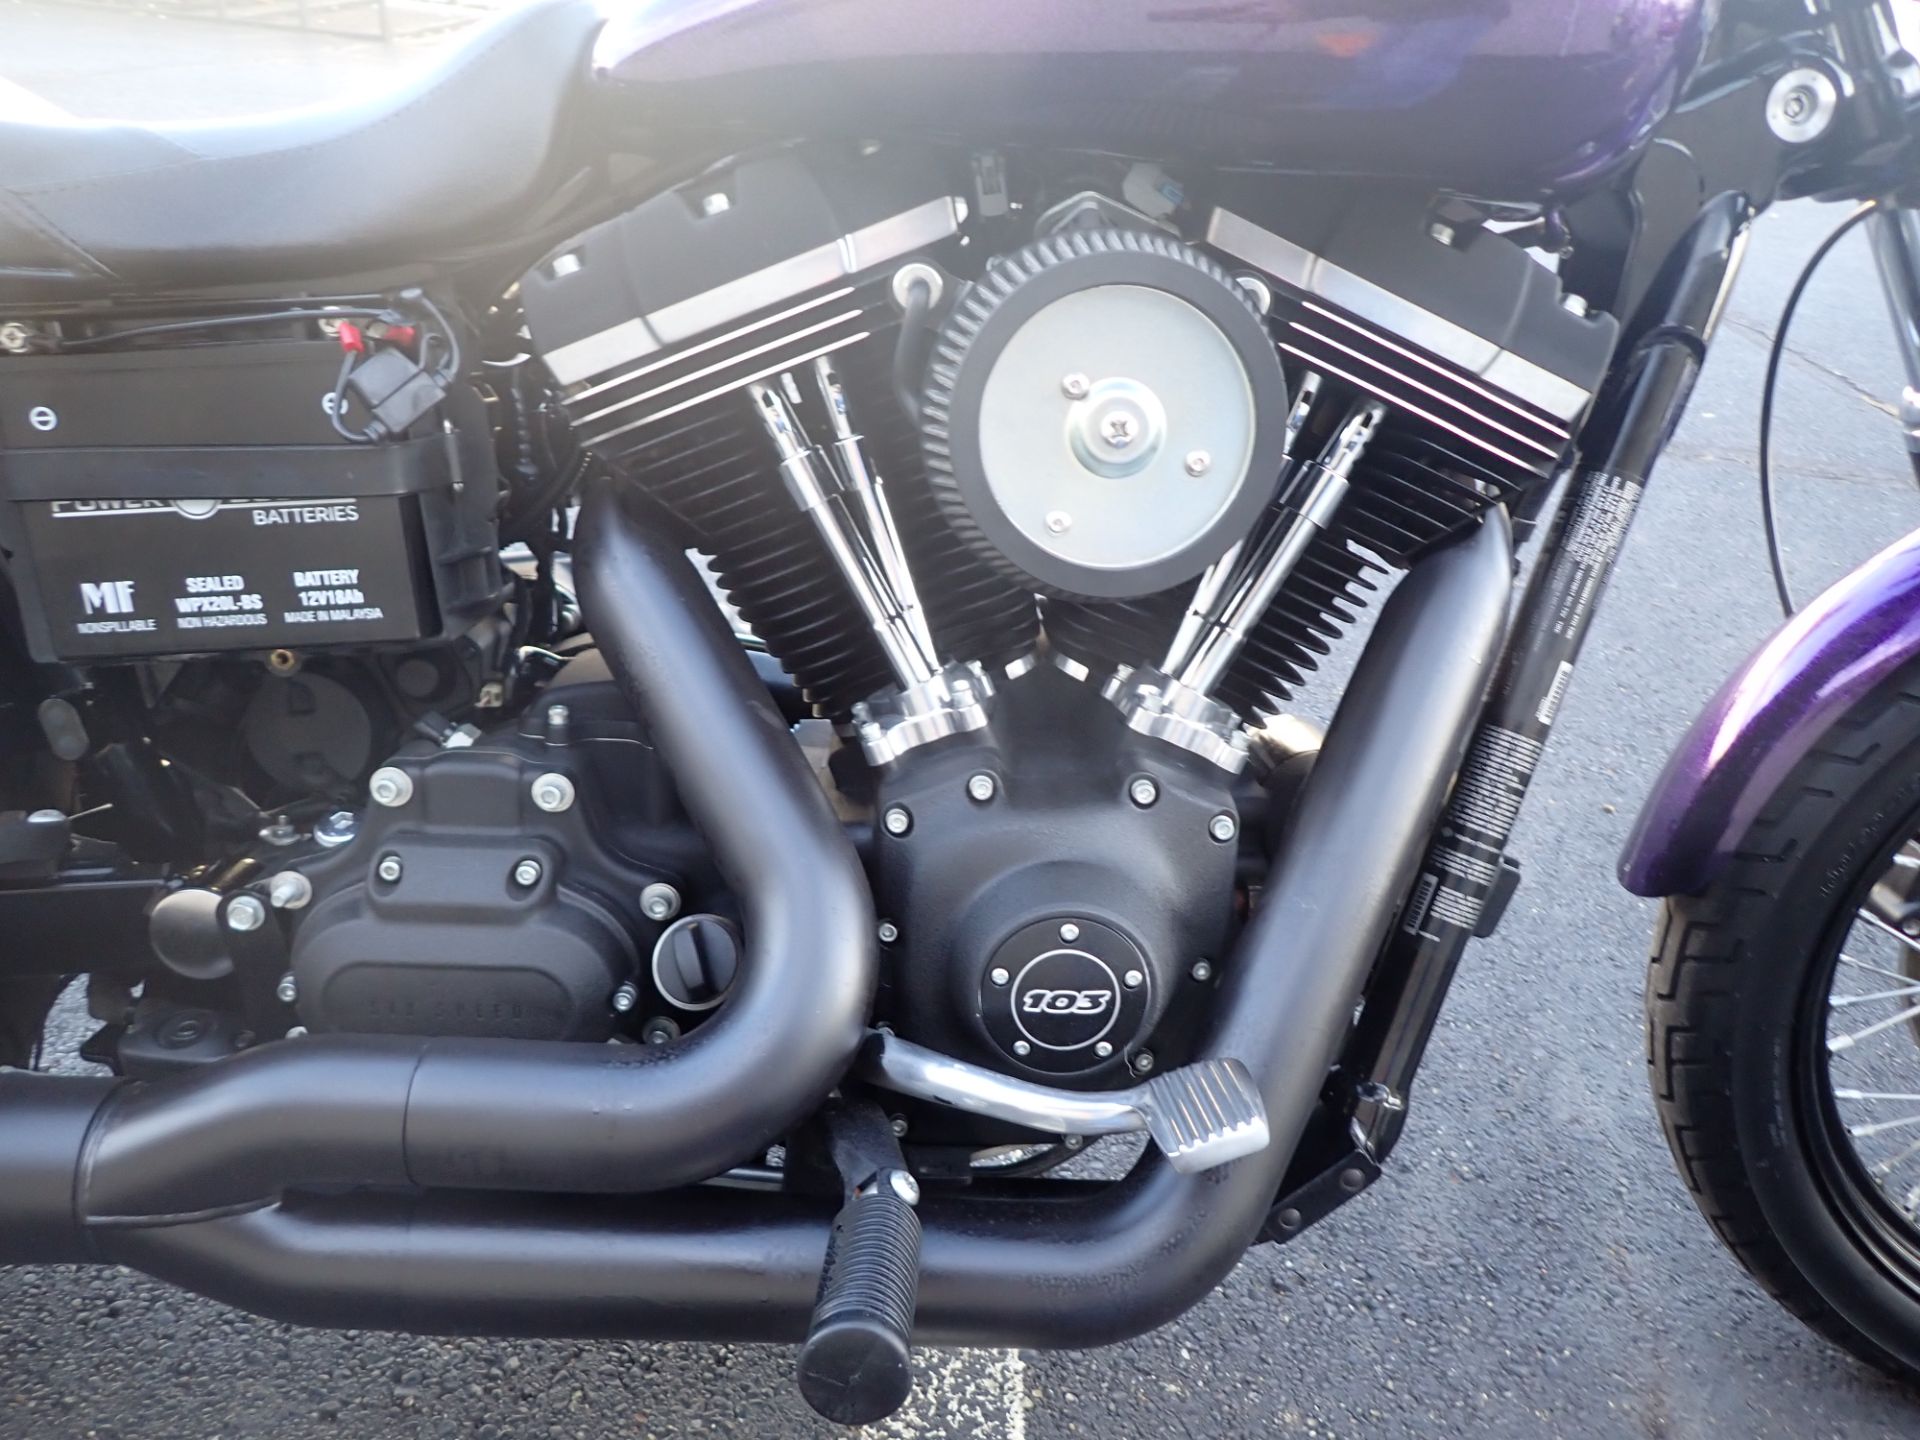 2014 Harley-Davidson Dyna® Street Bob® in Massillon, Ohio - Photo 4